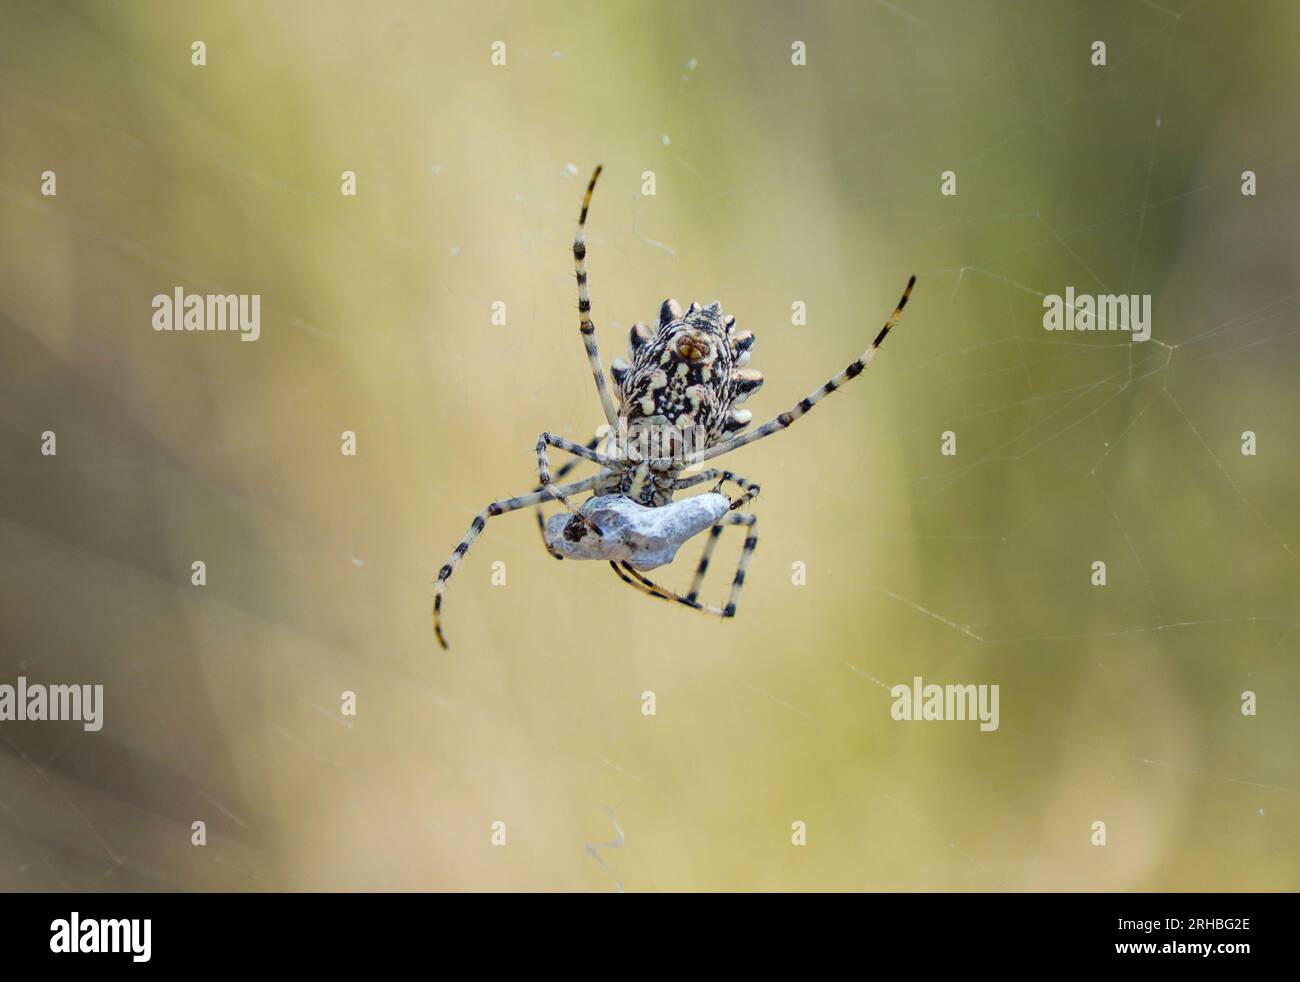 Lobed Argiope, Argiope lobata spider in web, female ballooning a prey. Spain. Stock Photo